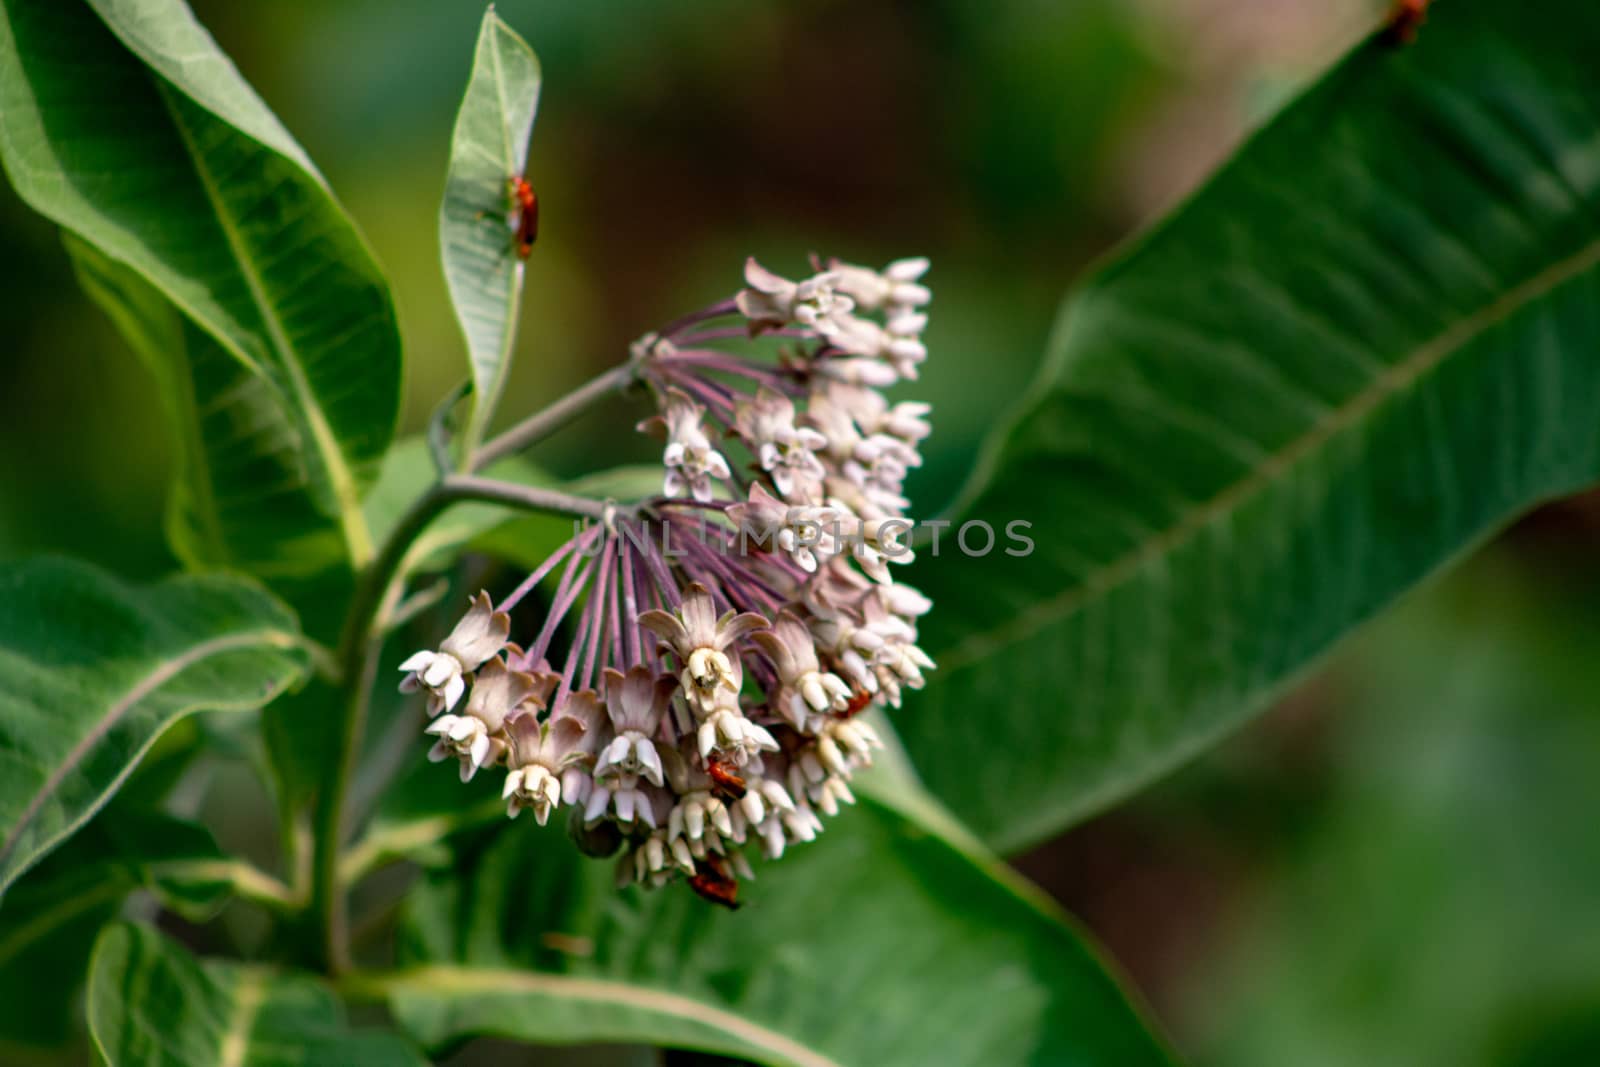 important wild flower, milkweed is vital for monarch butterflies